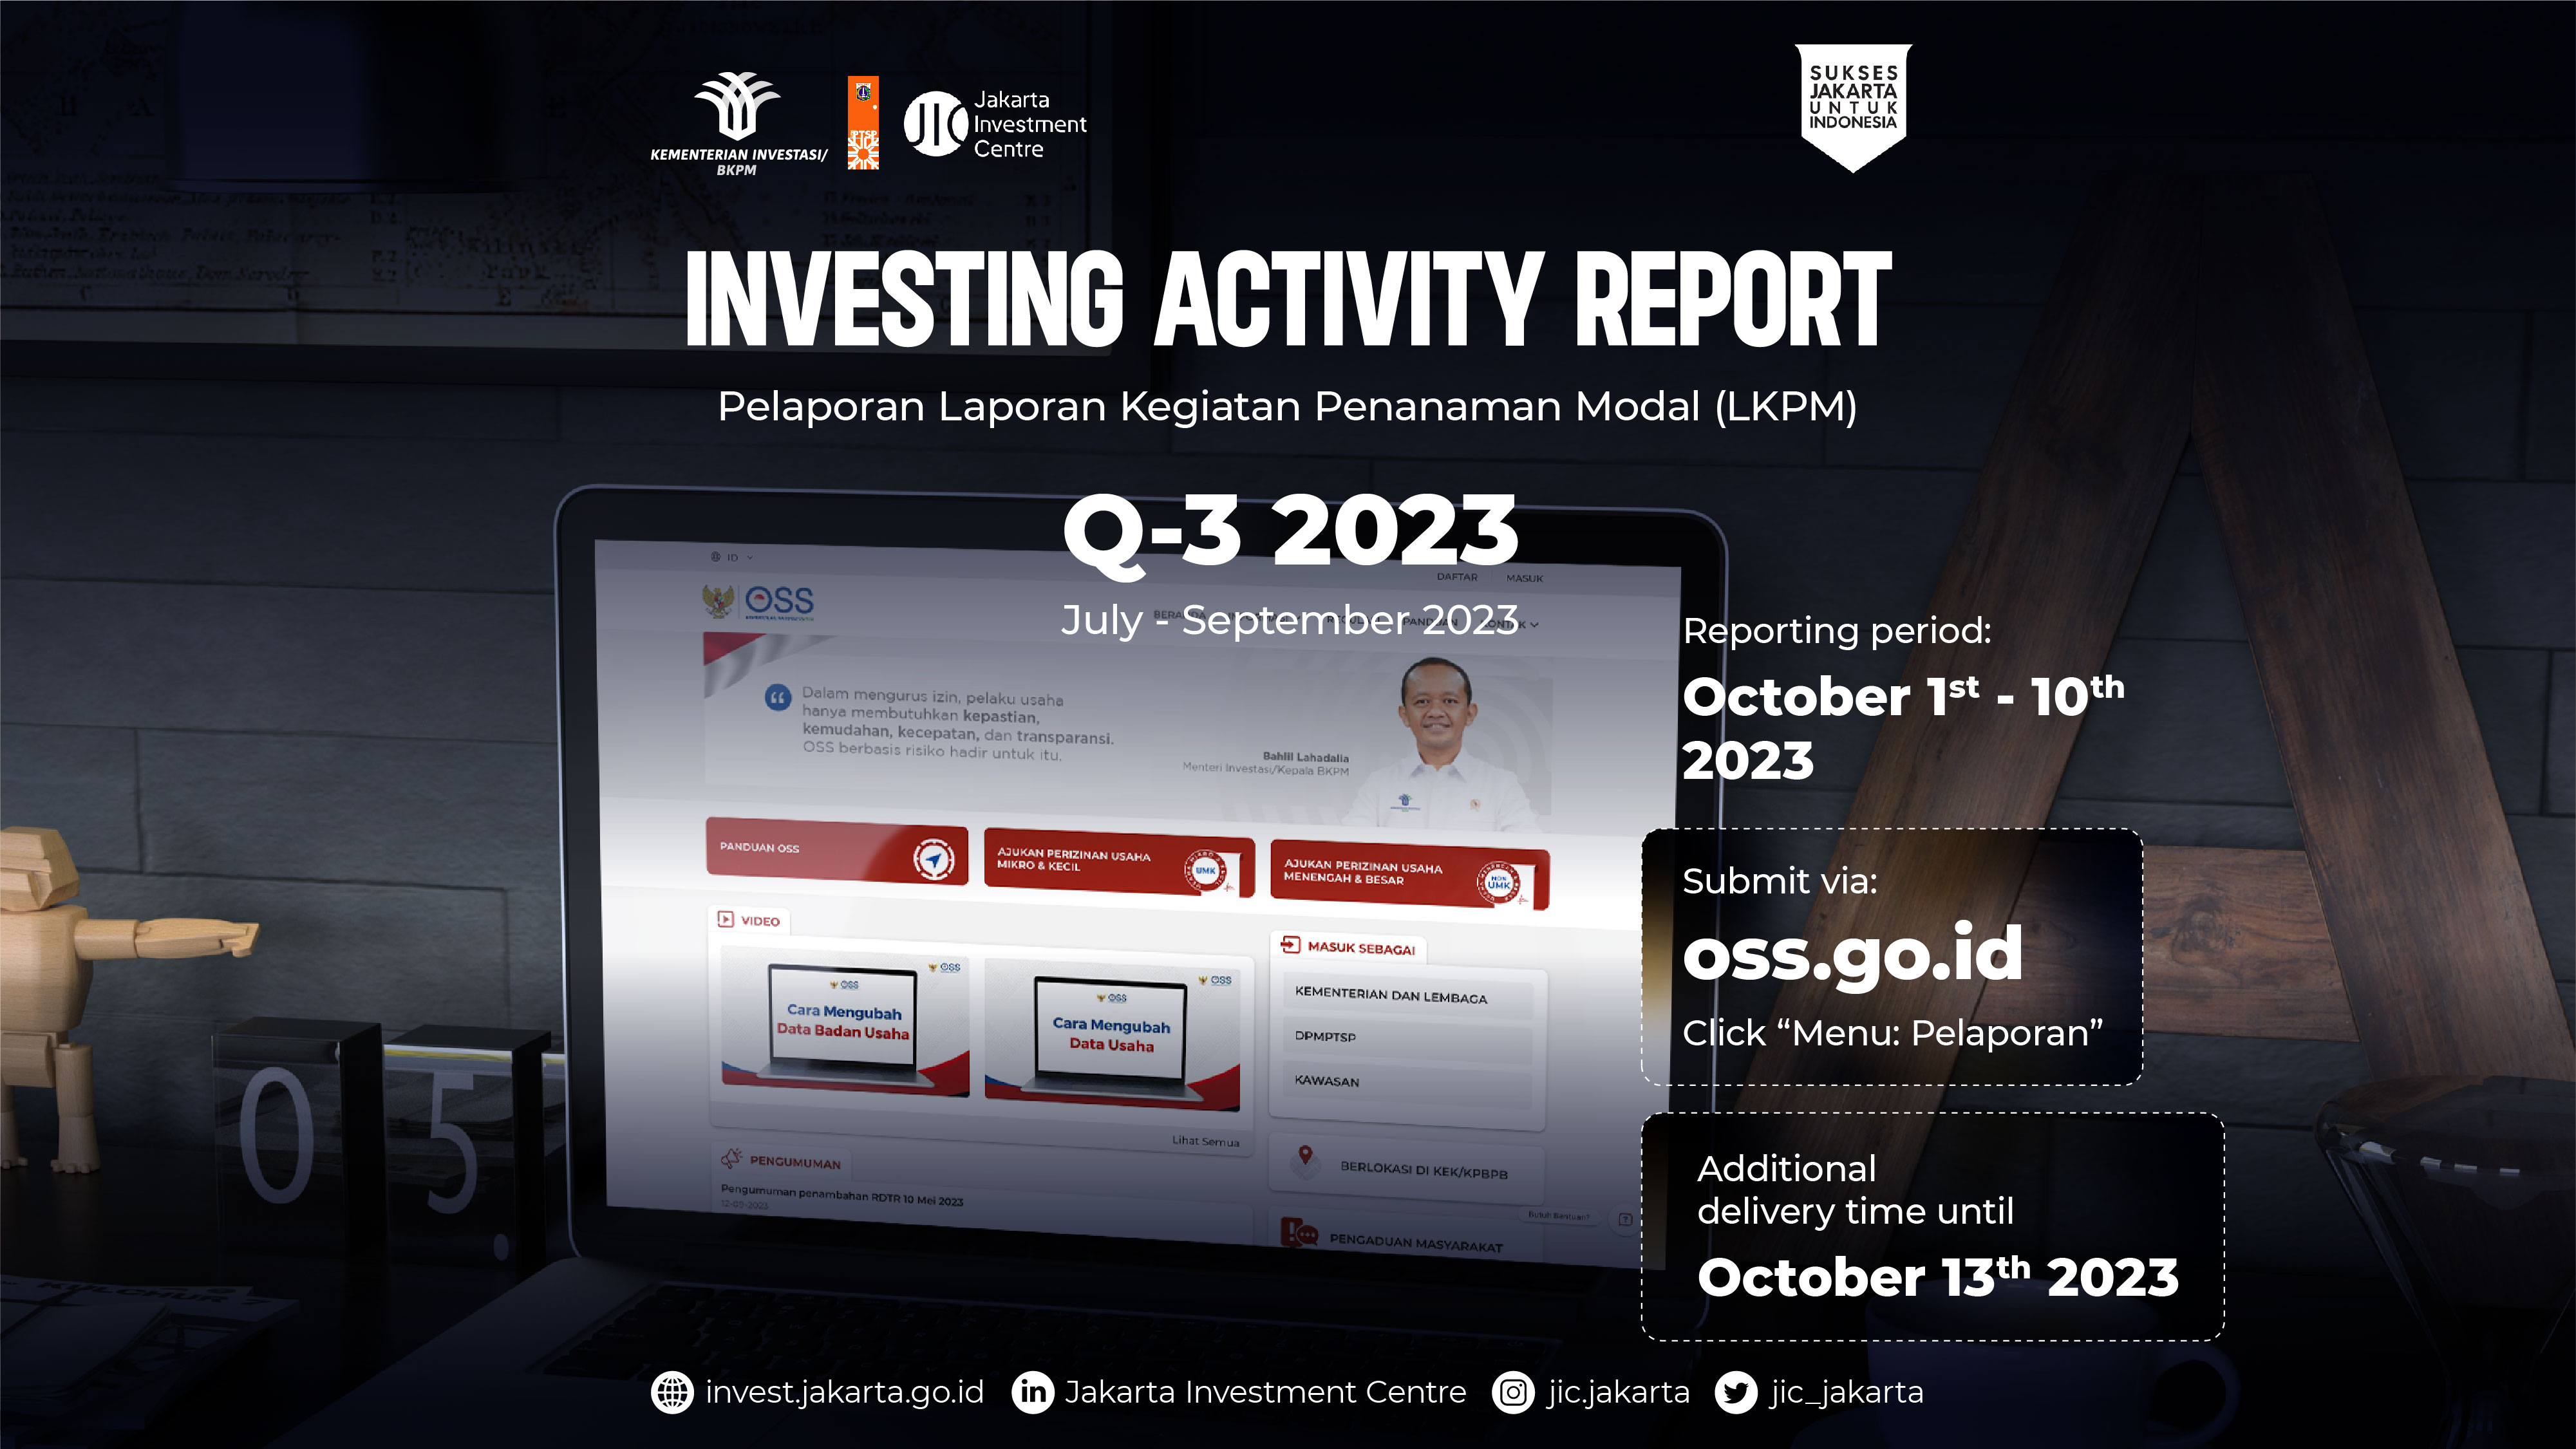 Investing Activity Report (Pelaporan Laporan Kegiatan Penanaman Modal / LKPM) Quarter III July - September 2023